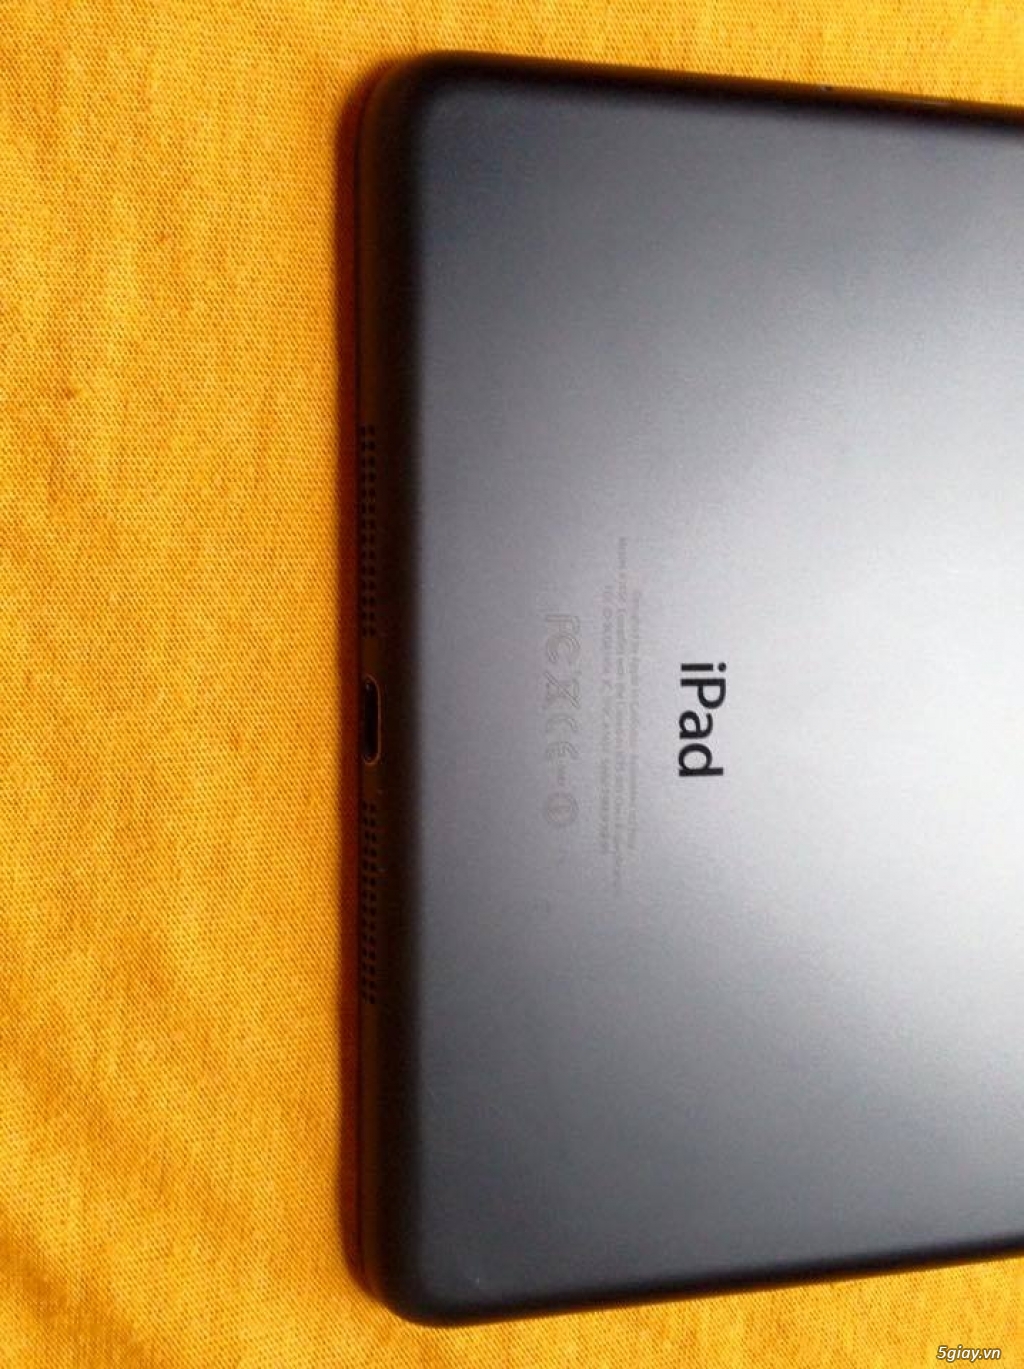 Topic chuyên iPad mini2 mini1 like new giá tốt - 2